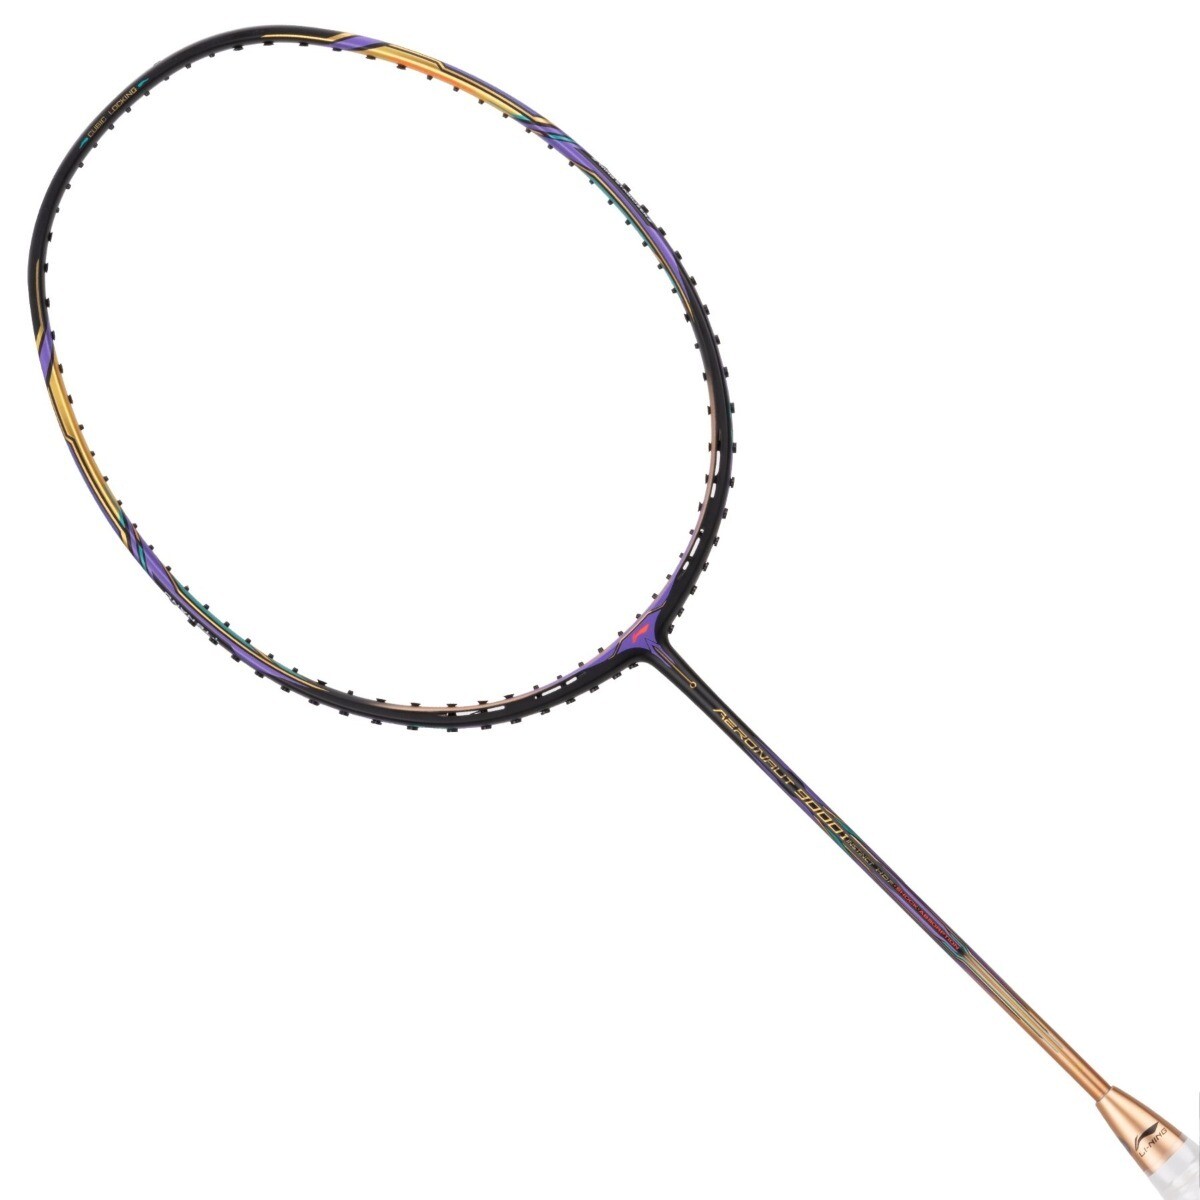 LI-NING Aeronaut 9000i Instinct Badminton Racquet